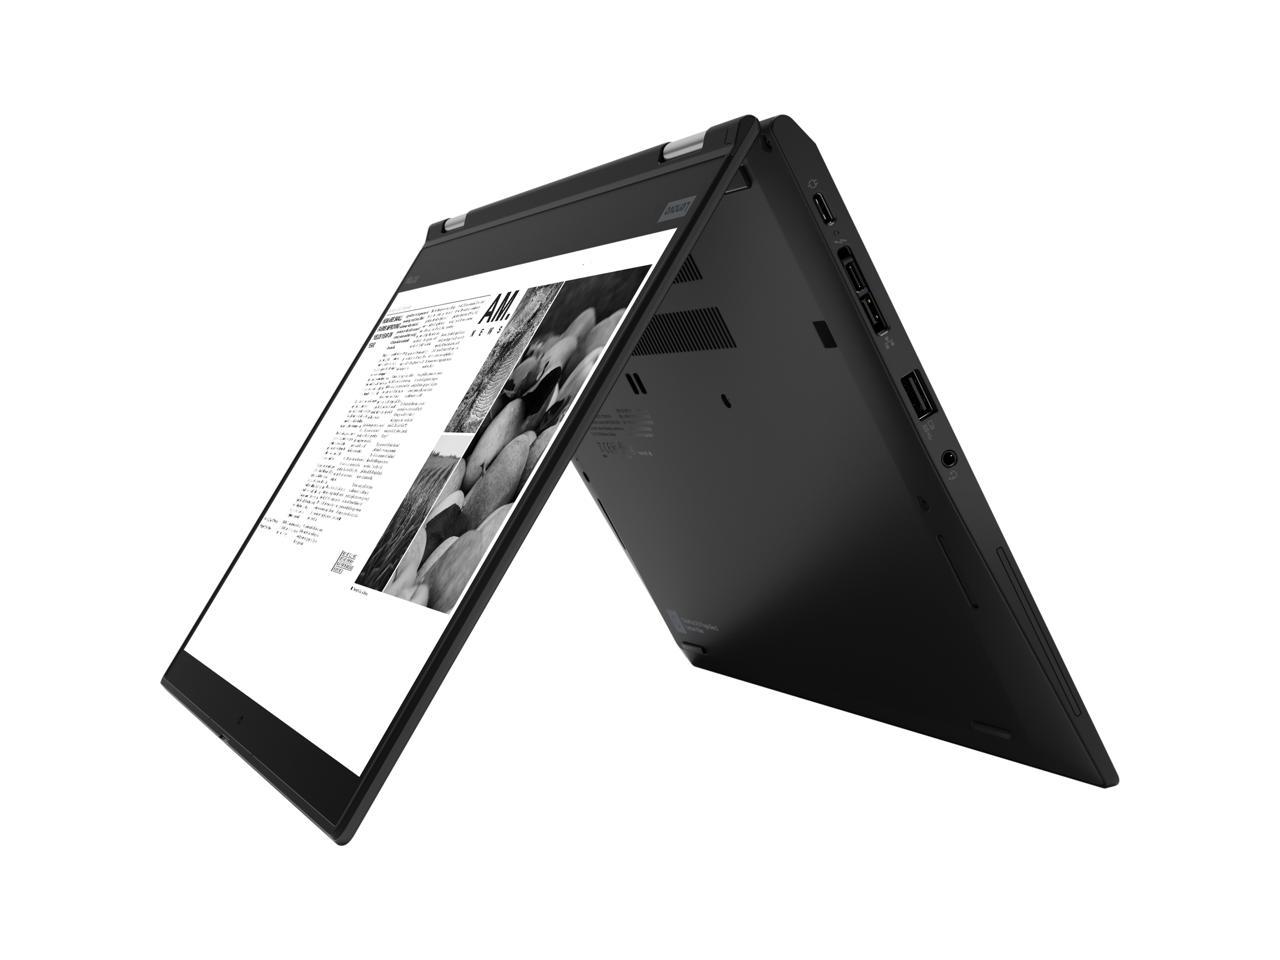 Lenovo ThinkPad X13 Yoga 13.3" Touchscreen Laptop i7-10610U 16GB 512GB SSD W10